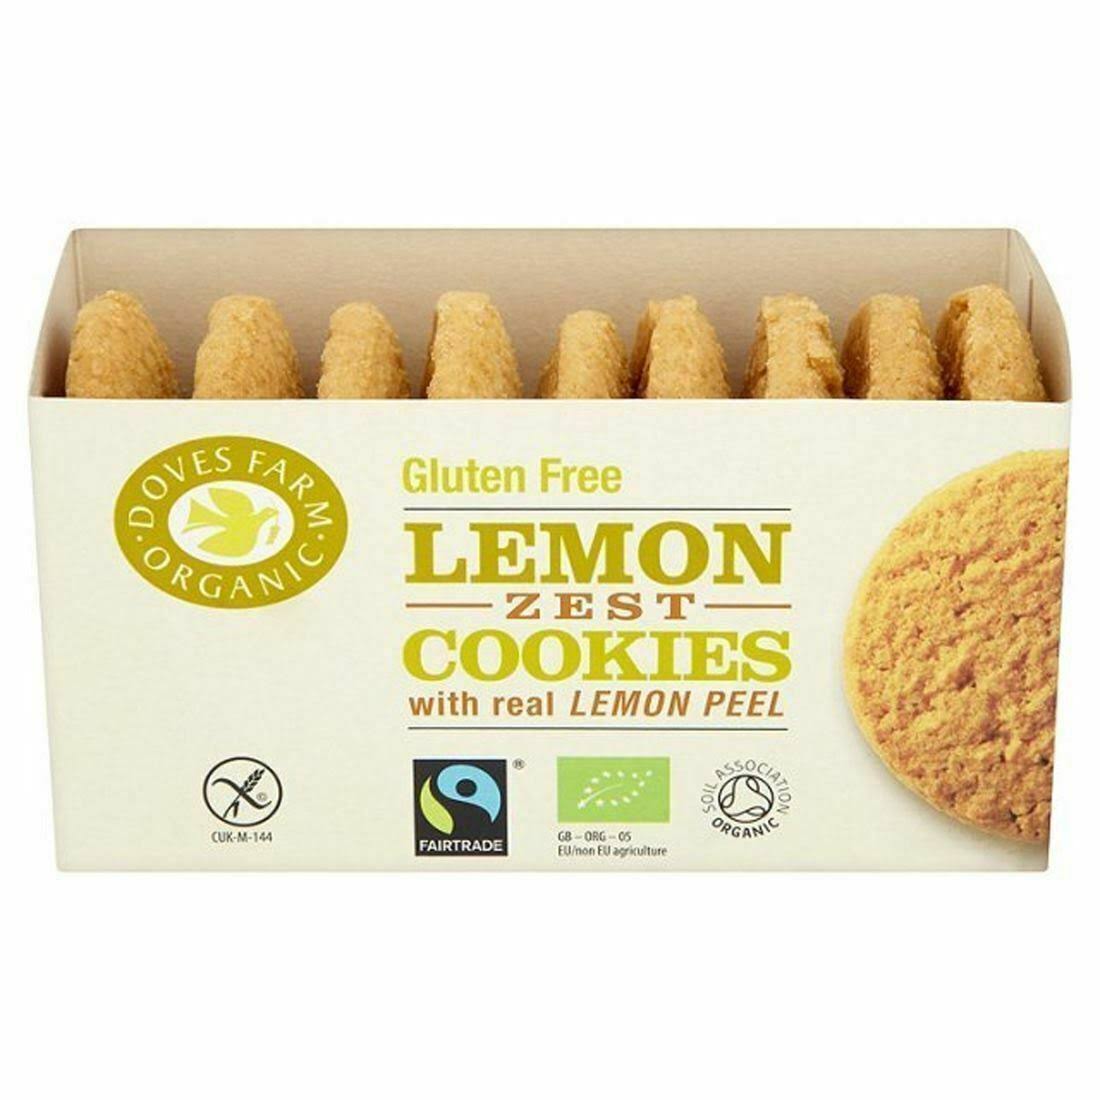 Doves Farm Gluten Free Organic Lemon Zest Cookies - 150g